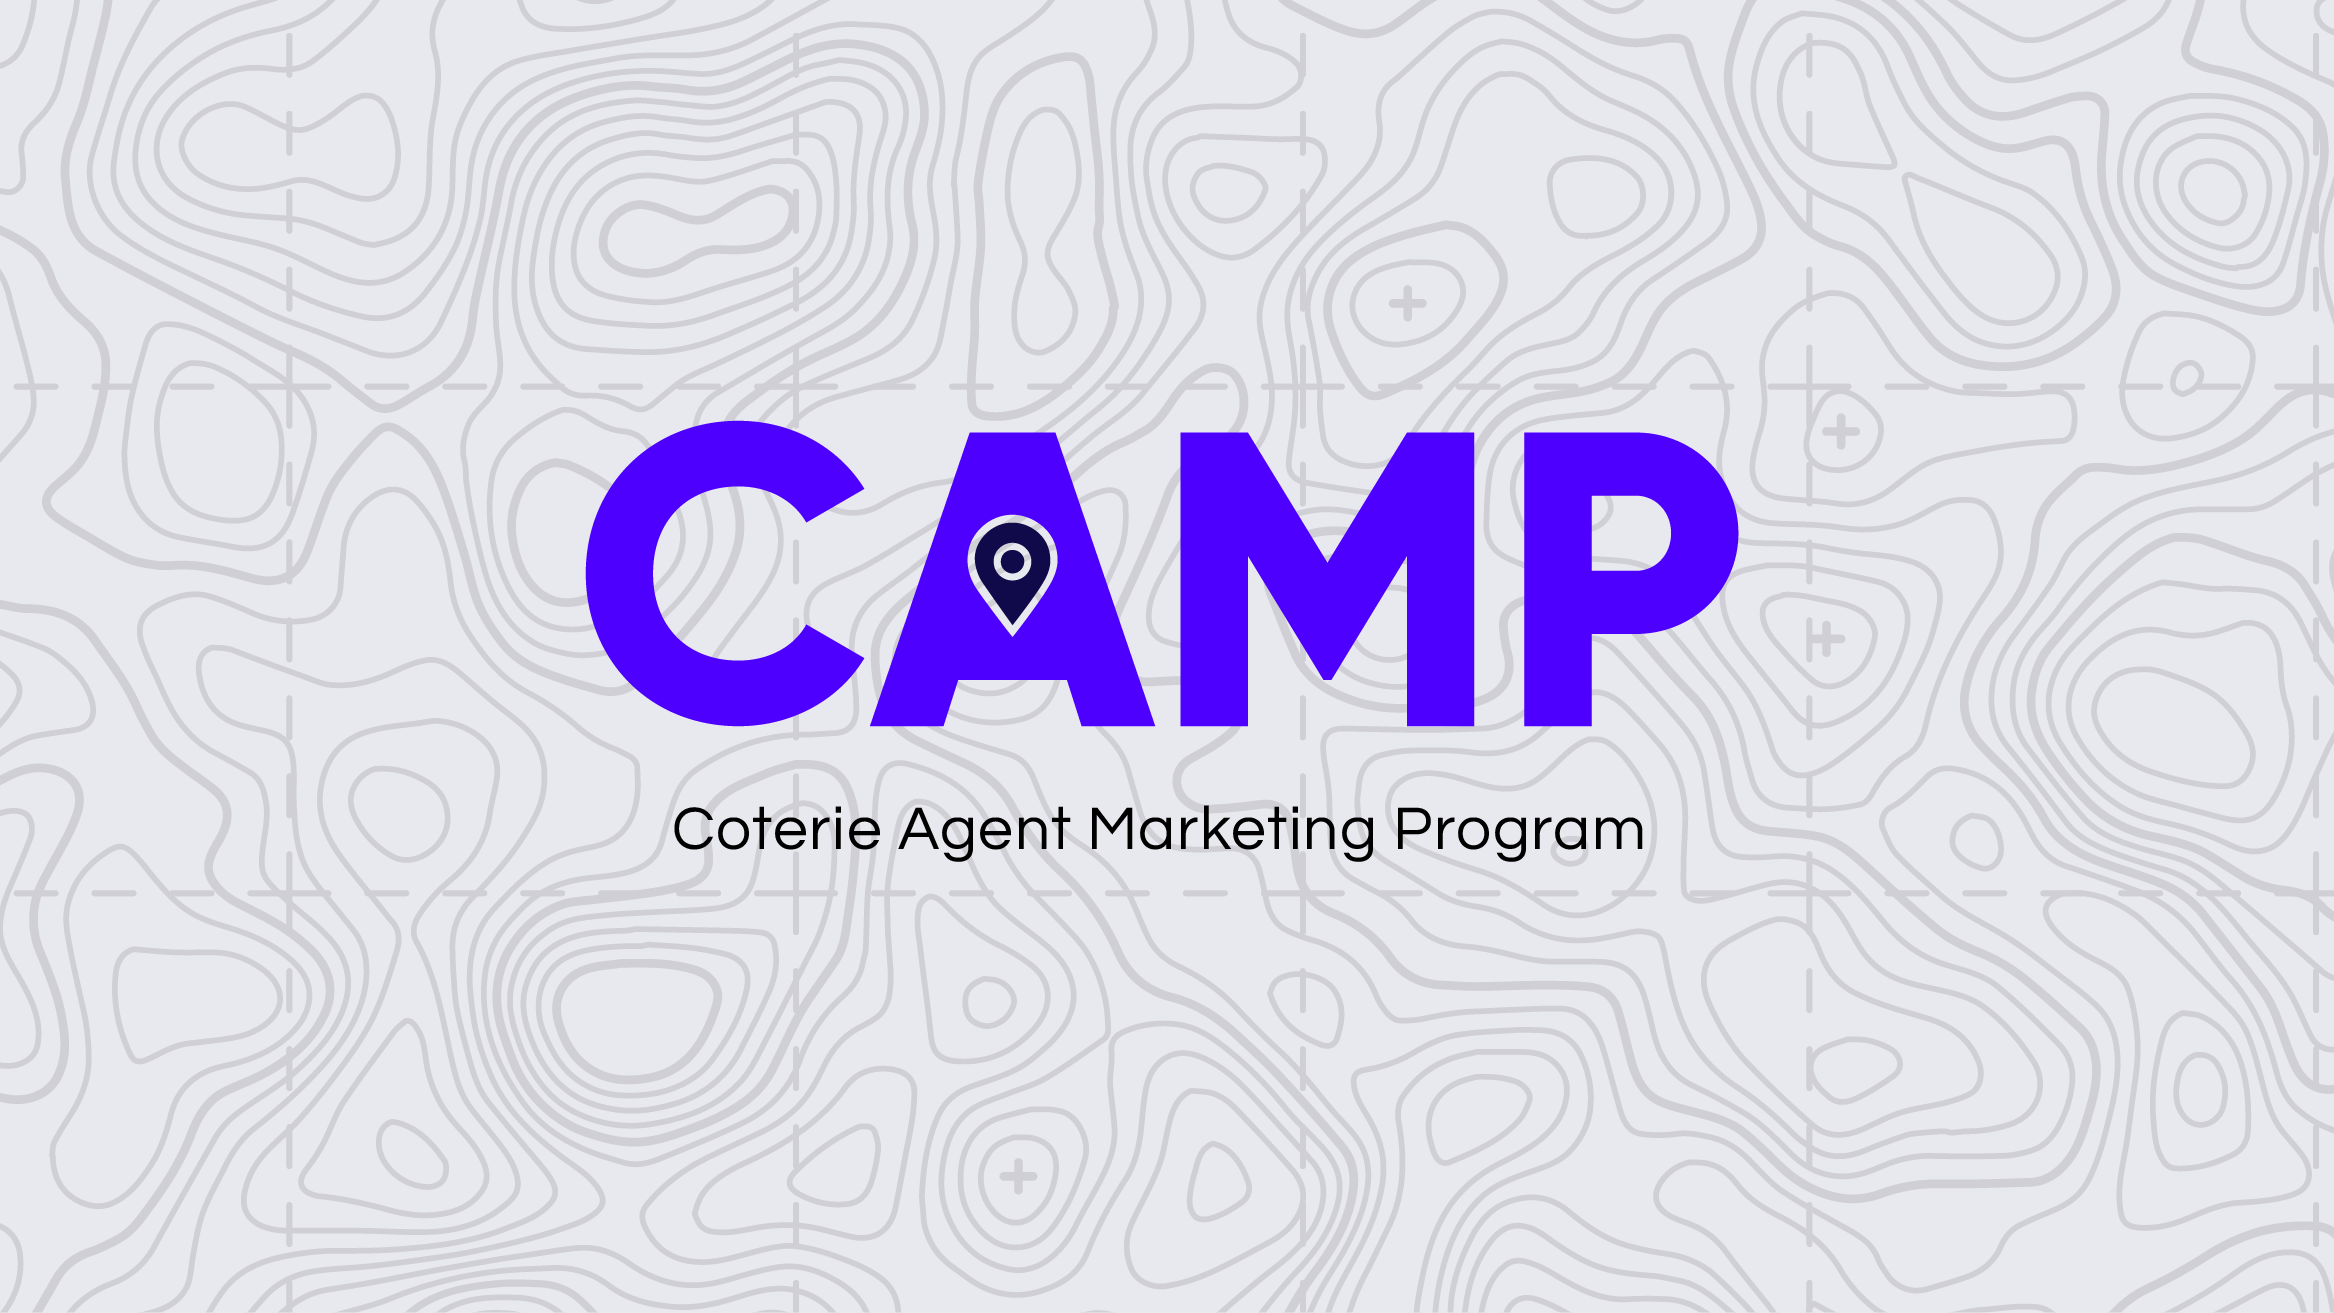 CAMP - Coterie Agent Marketing Program